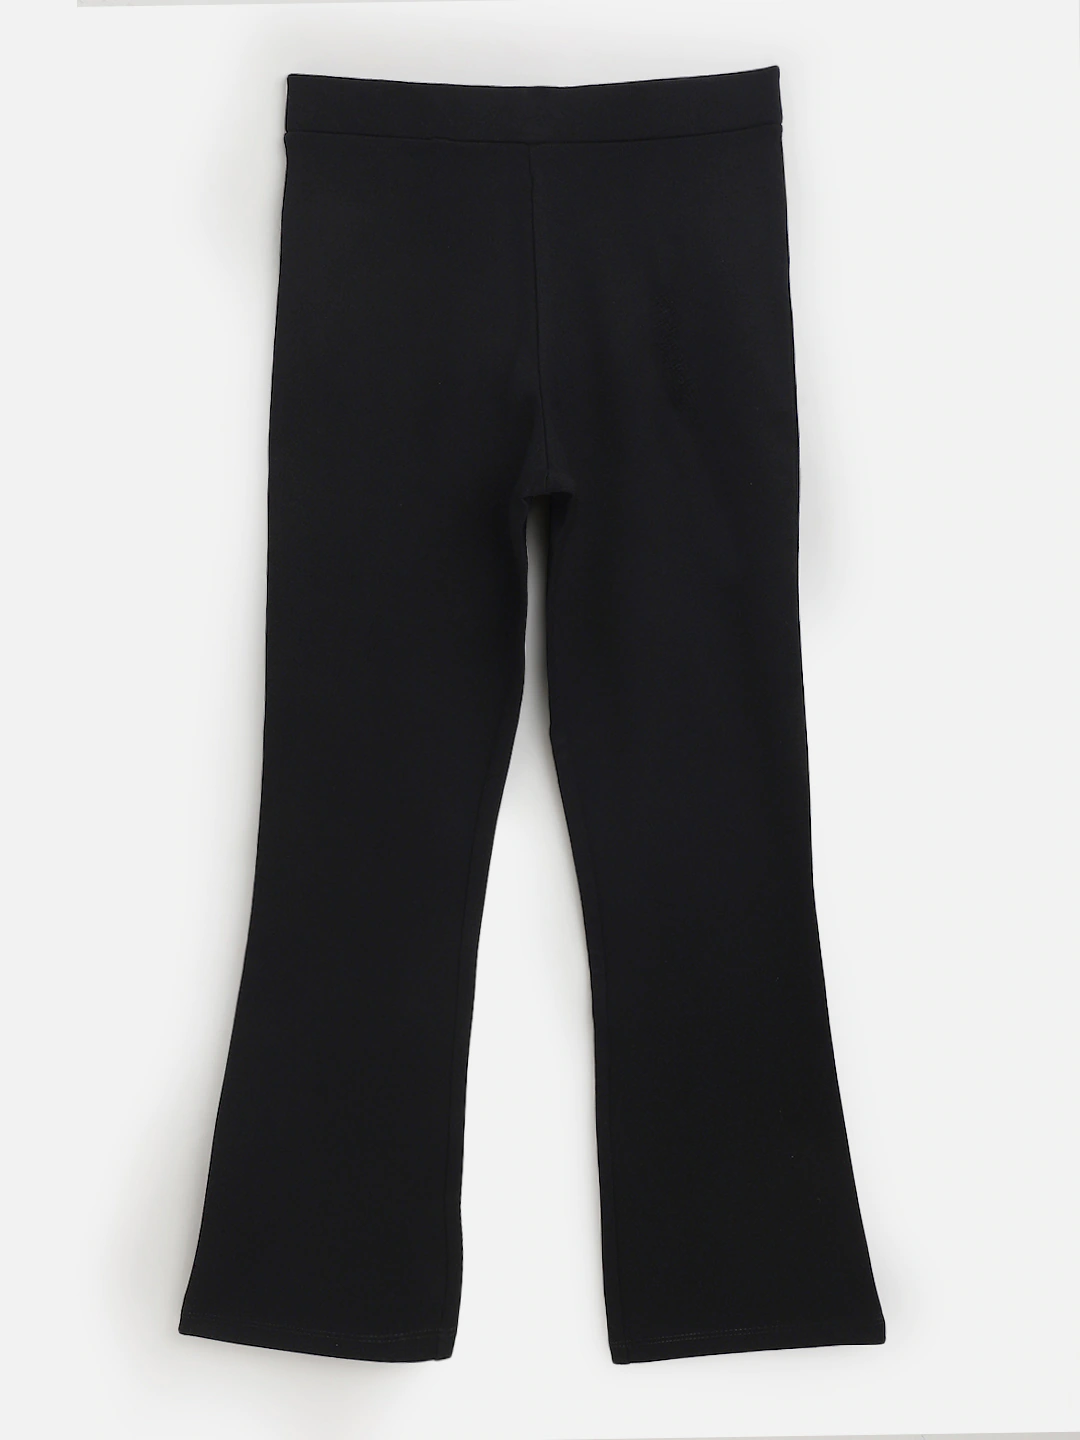 Women's Black Dress Pants for sale in Sioux Falls, South Dakota